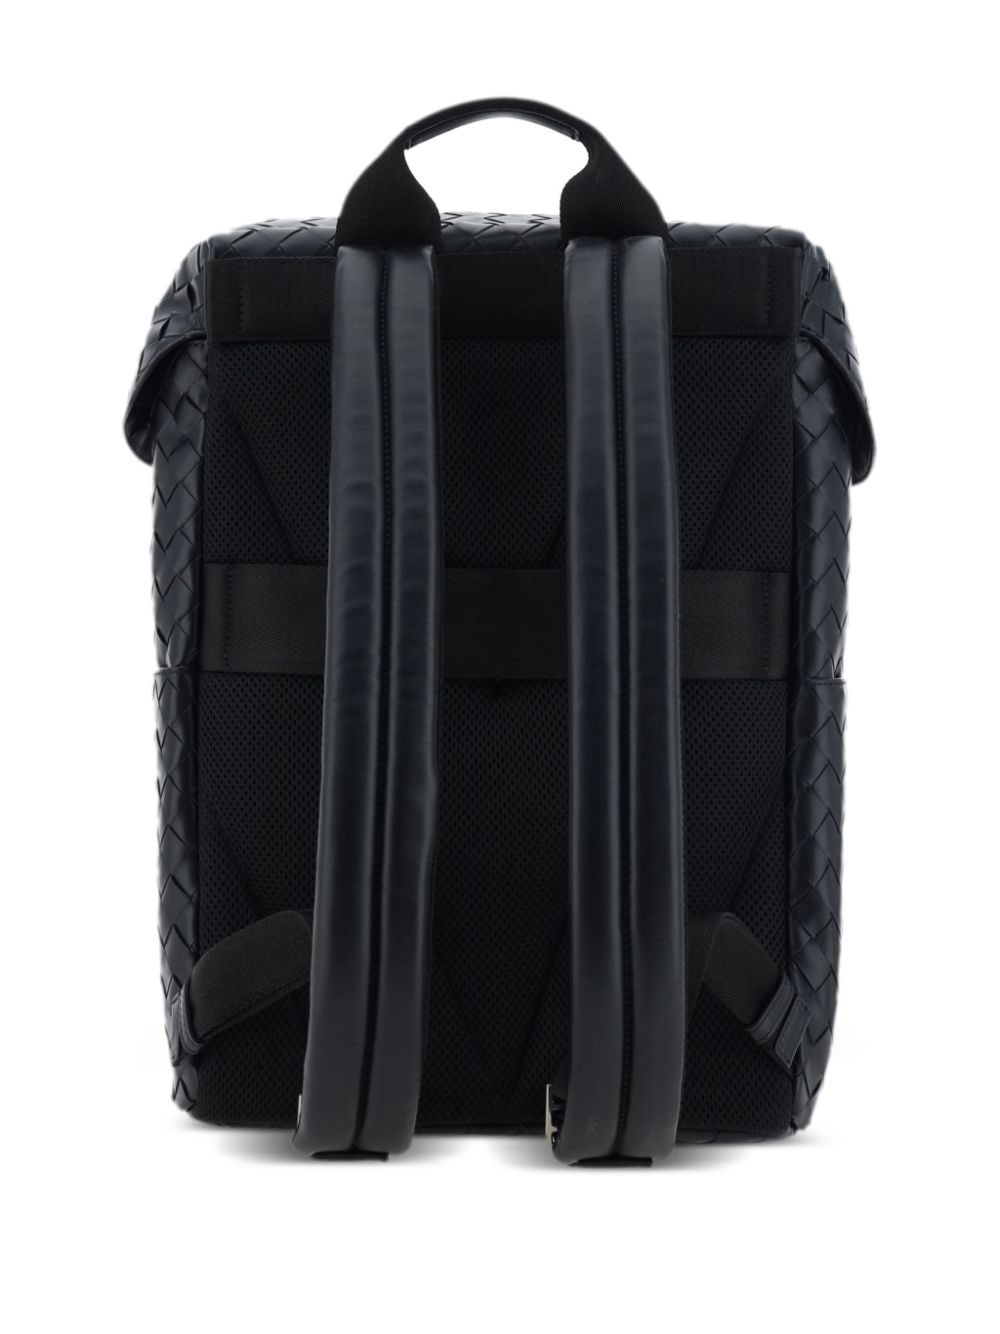 Intrecciato bucked leather backpack - 2